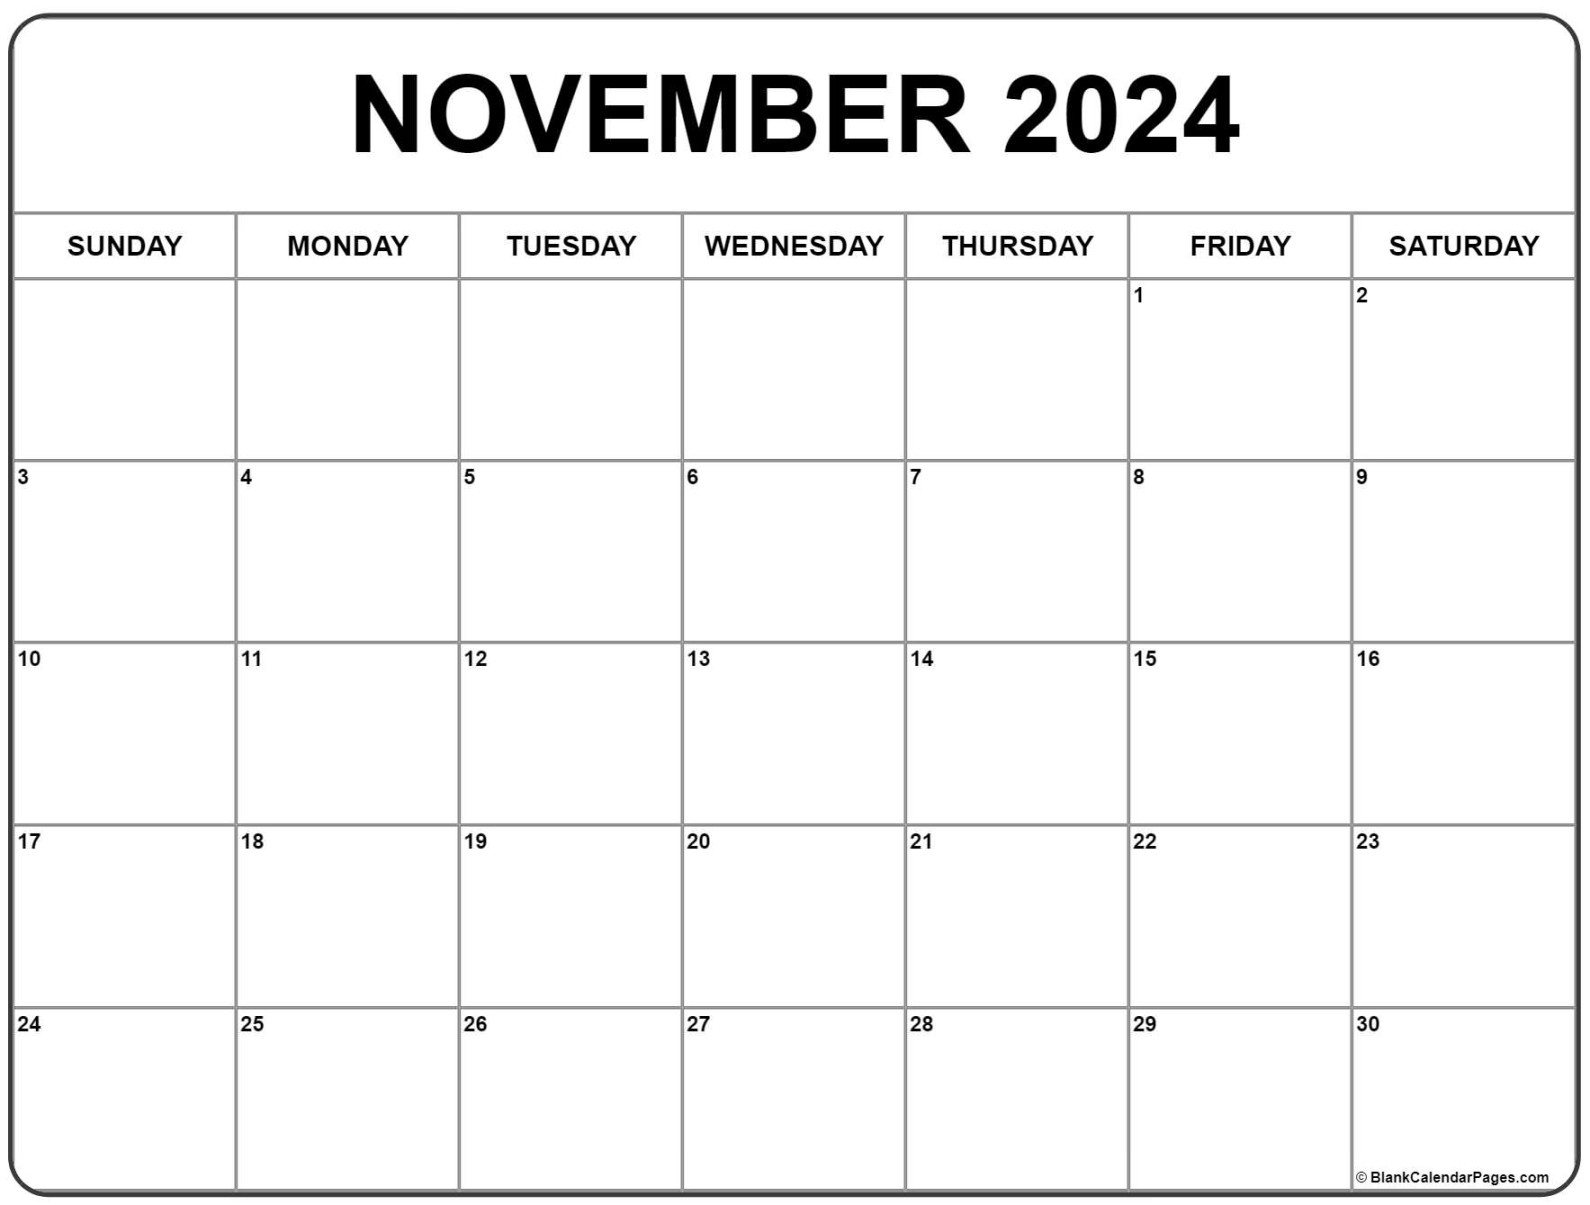 Print November 2024 Calendar